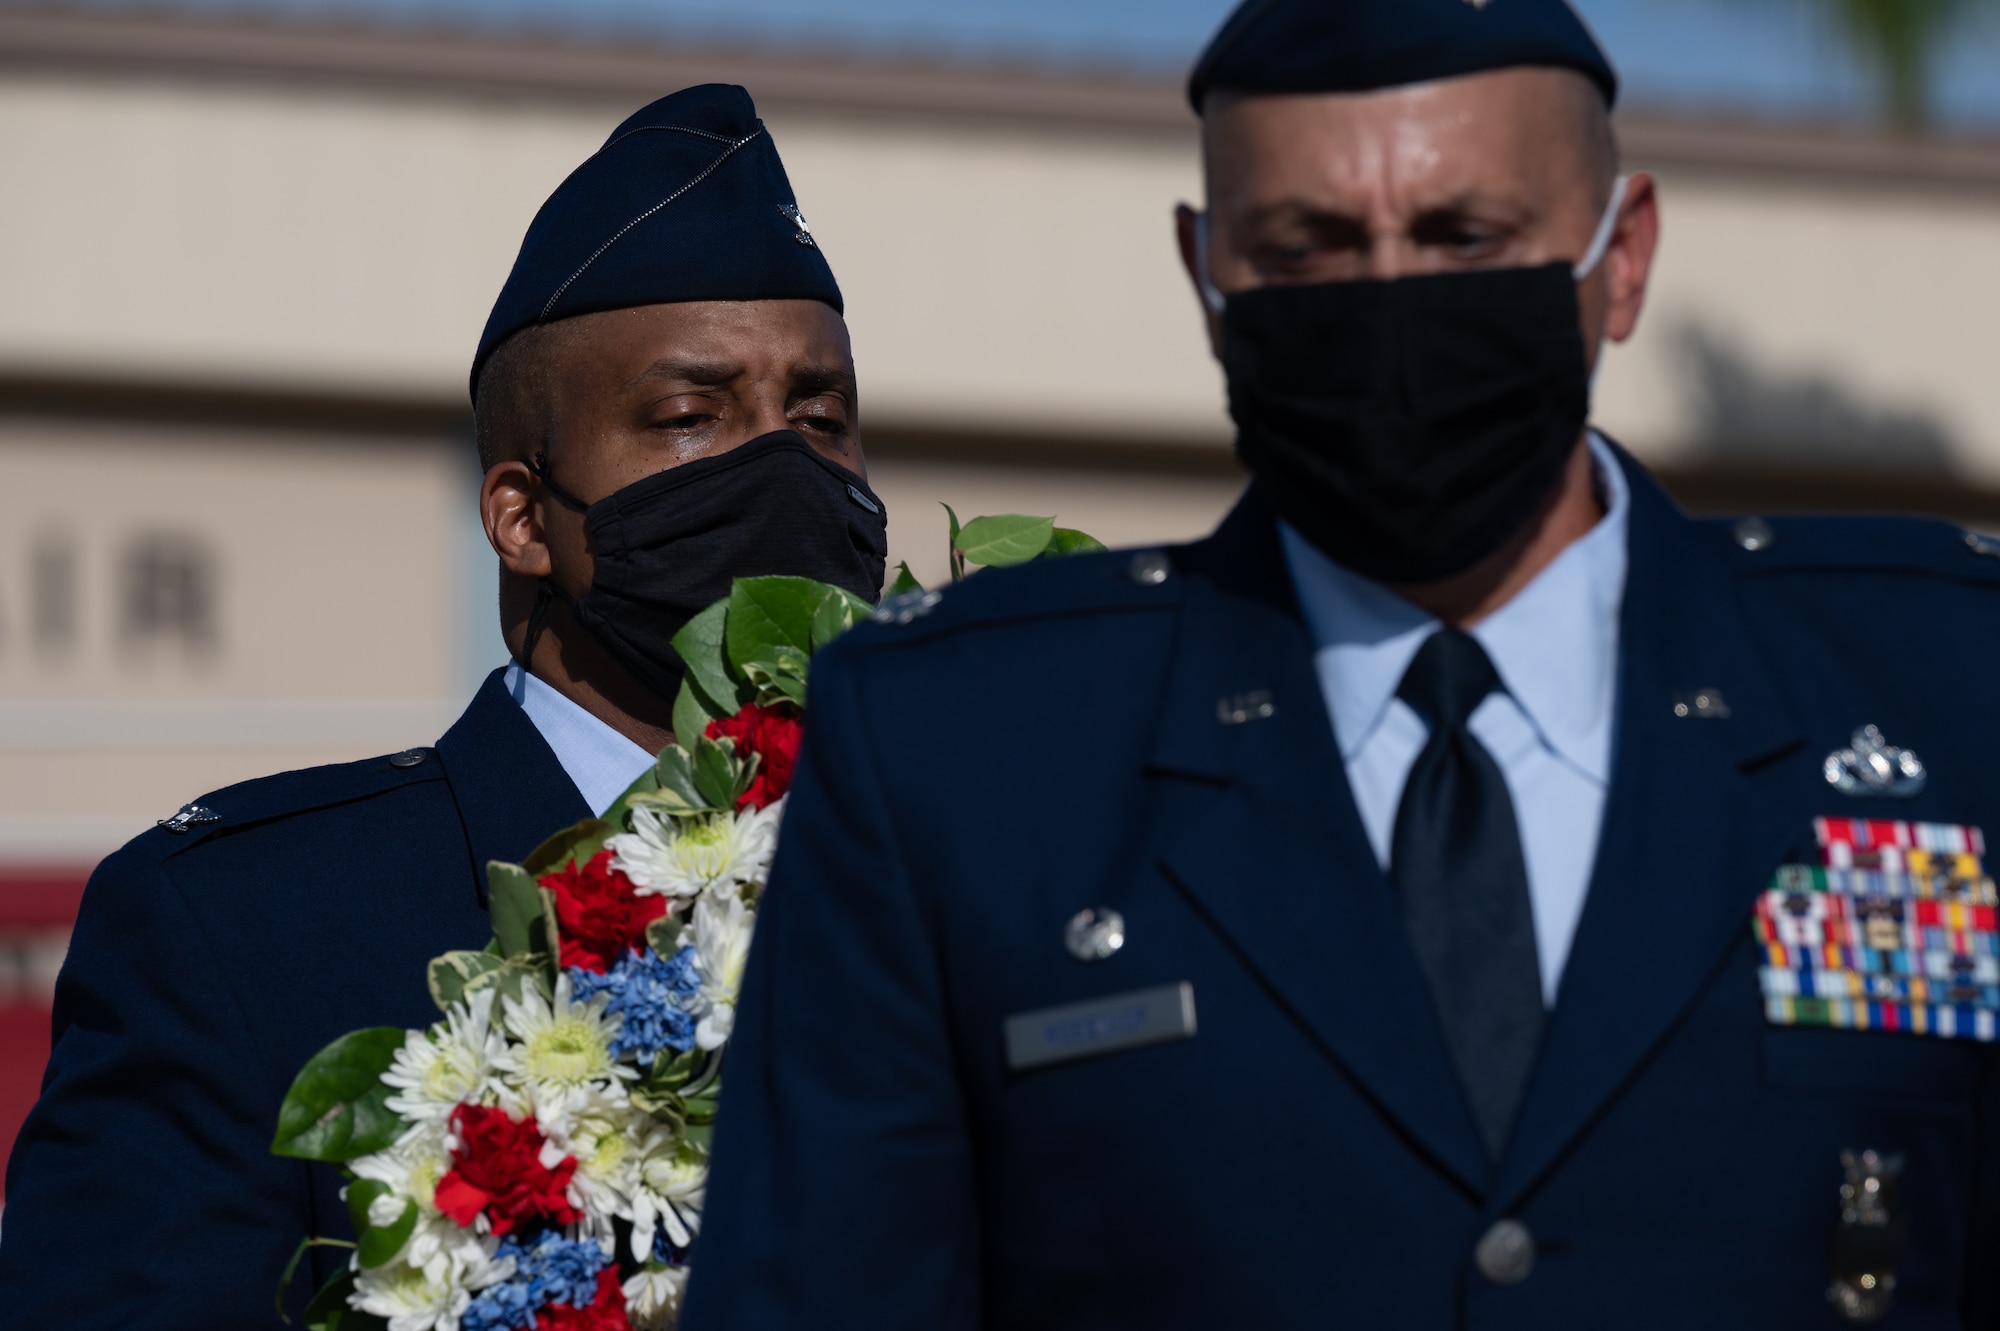 Airmen walking with a wreath